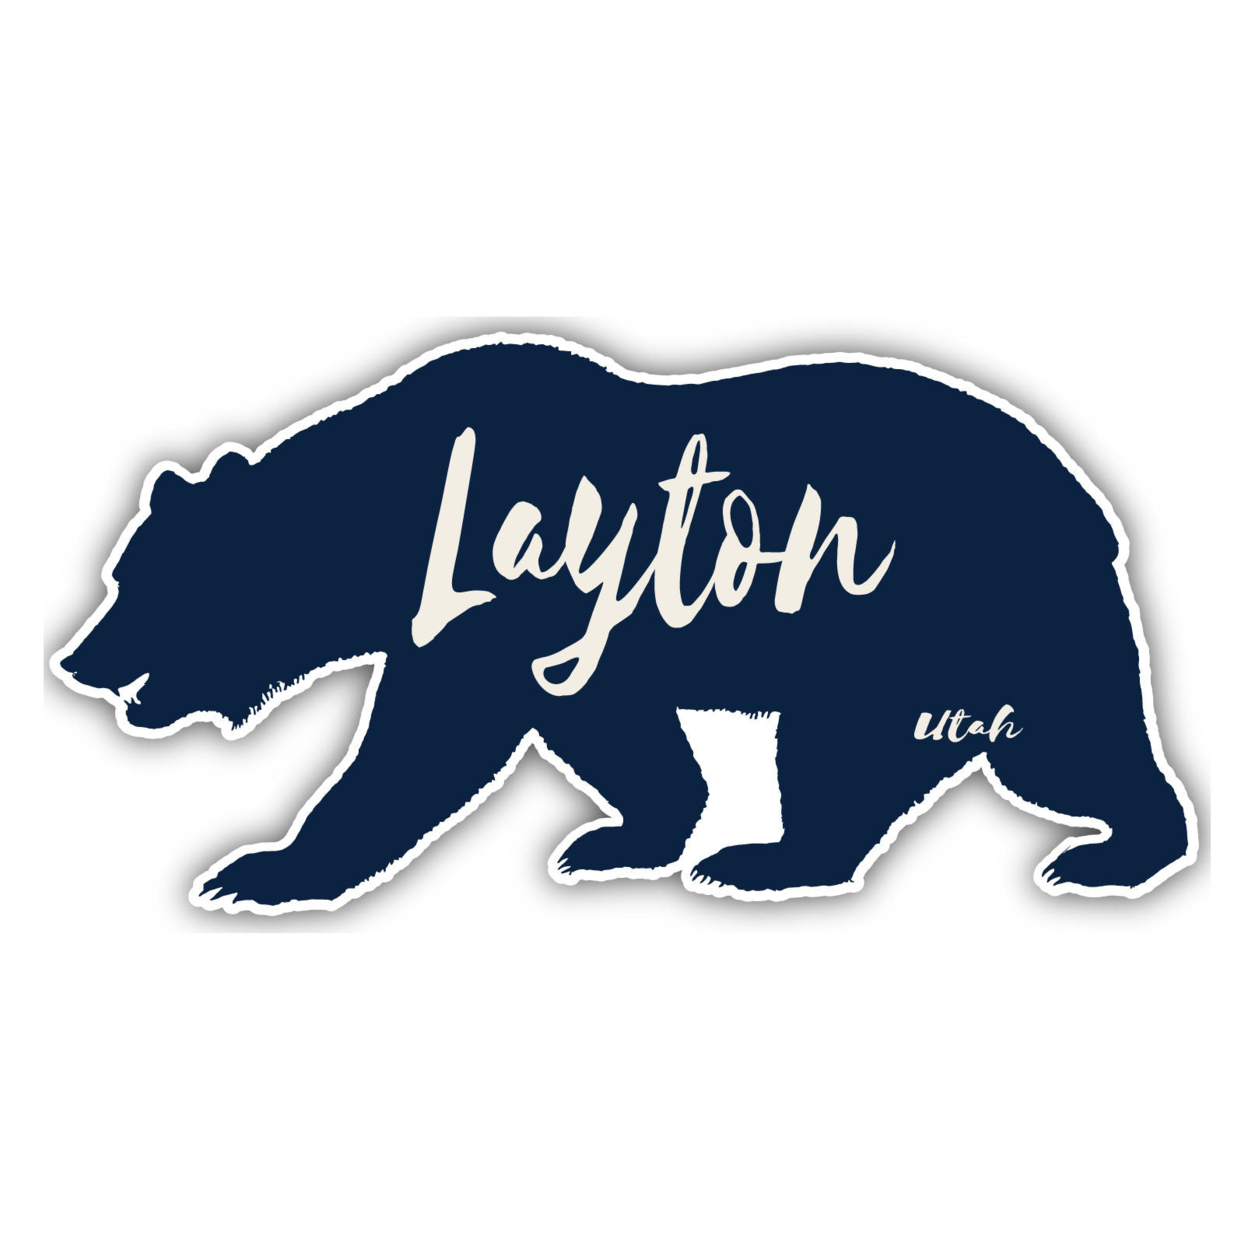 Layton Utah Souvenir Decorative Stickers (Choose Theme And Size) - 4-Inch, Bear